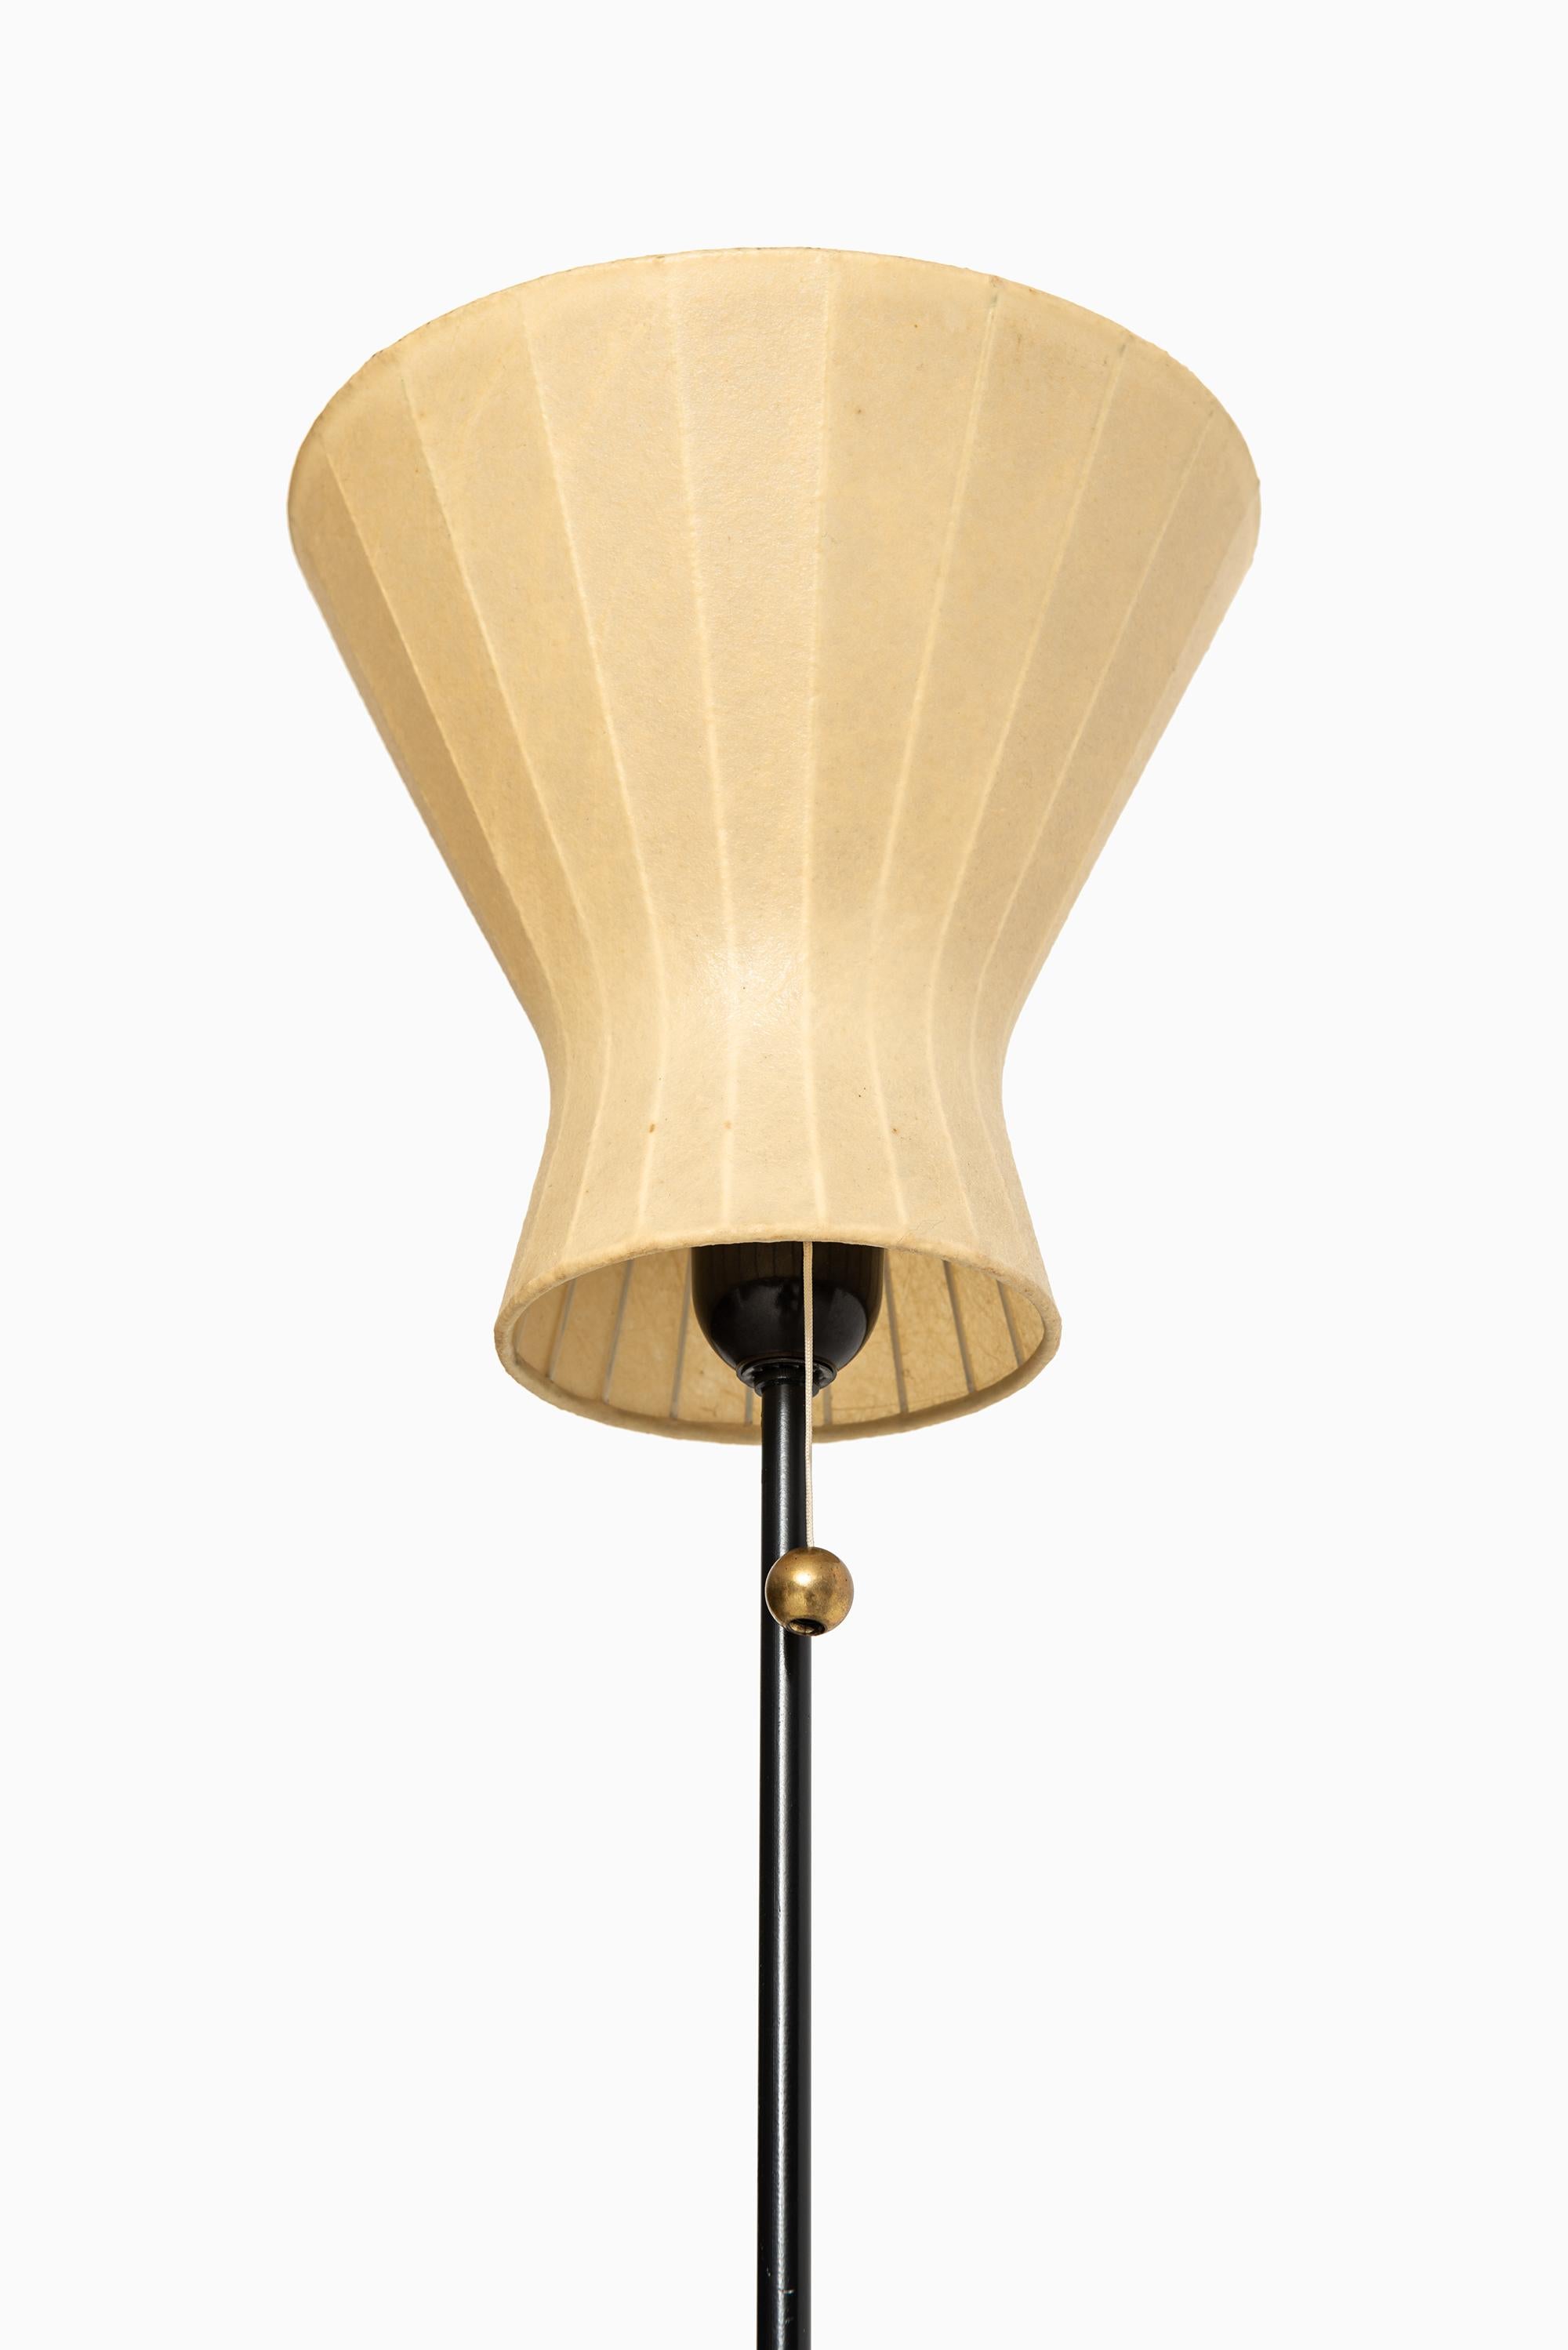 Swedish Hans Bergström Floor Lamp Model No 563 by Ateljé Lyktan in Sweden For Sale